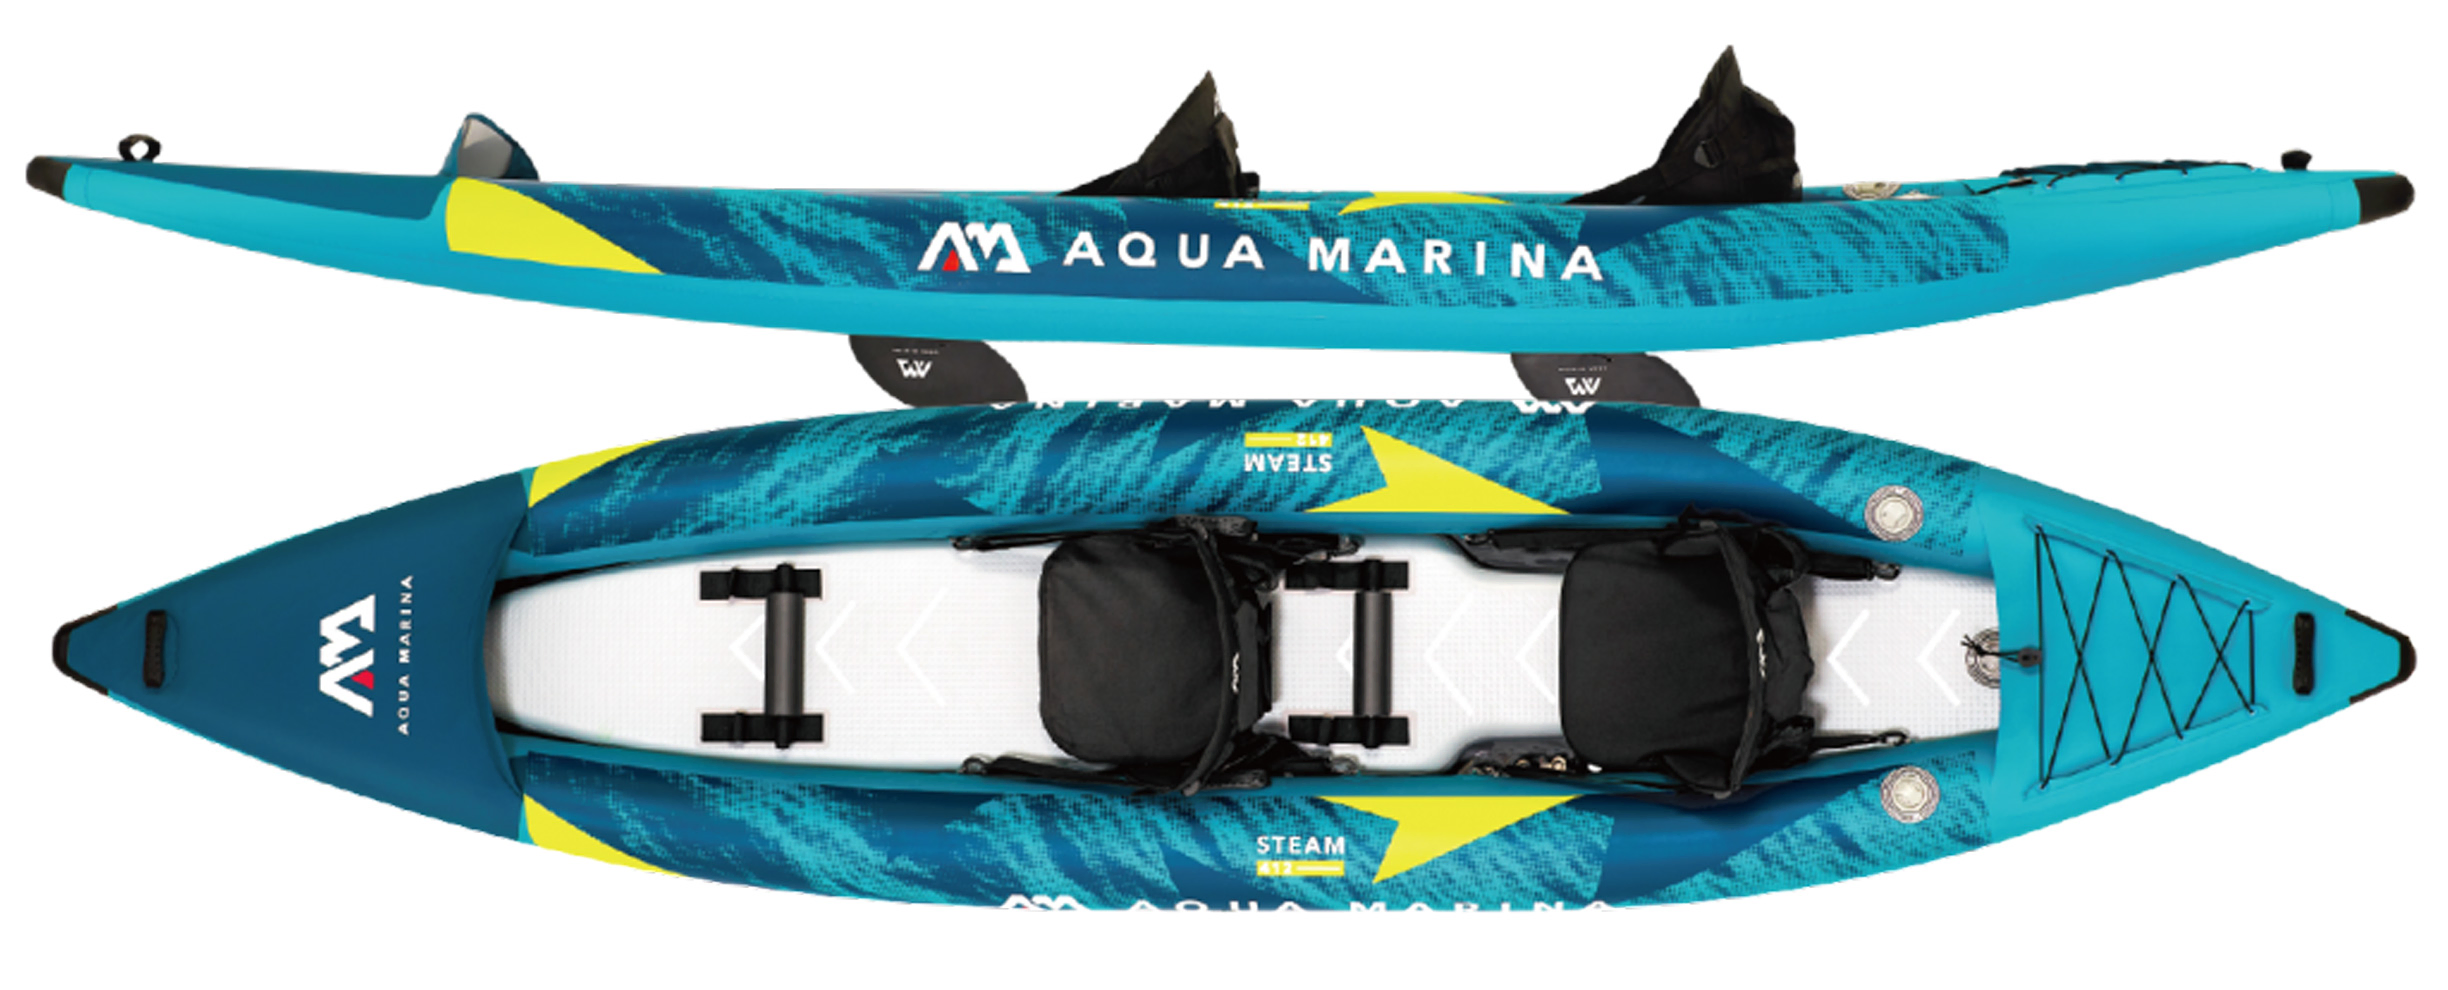 Aqua Marina Steam 412 Inflatable Kayak